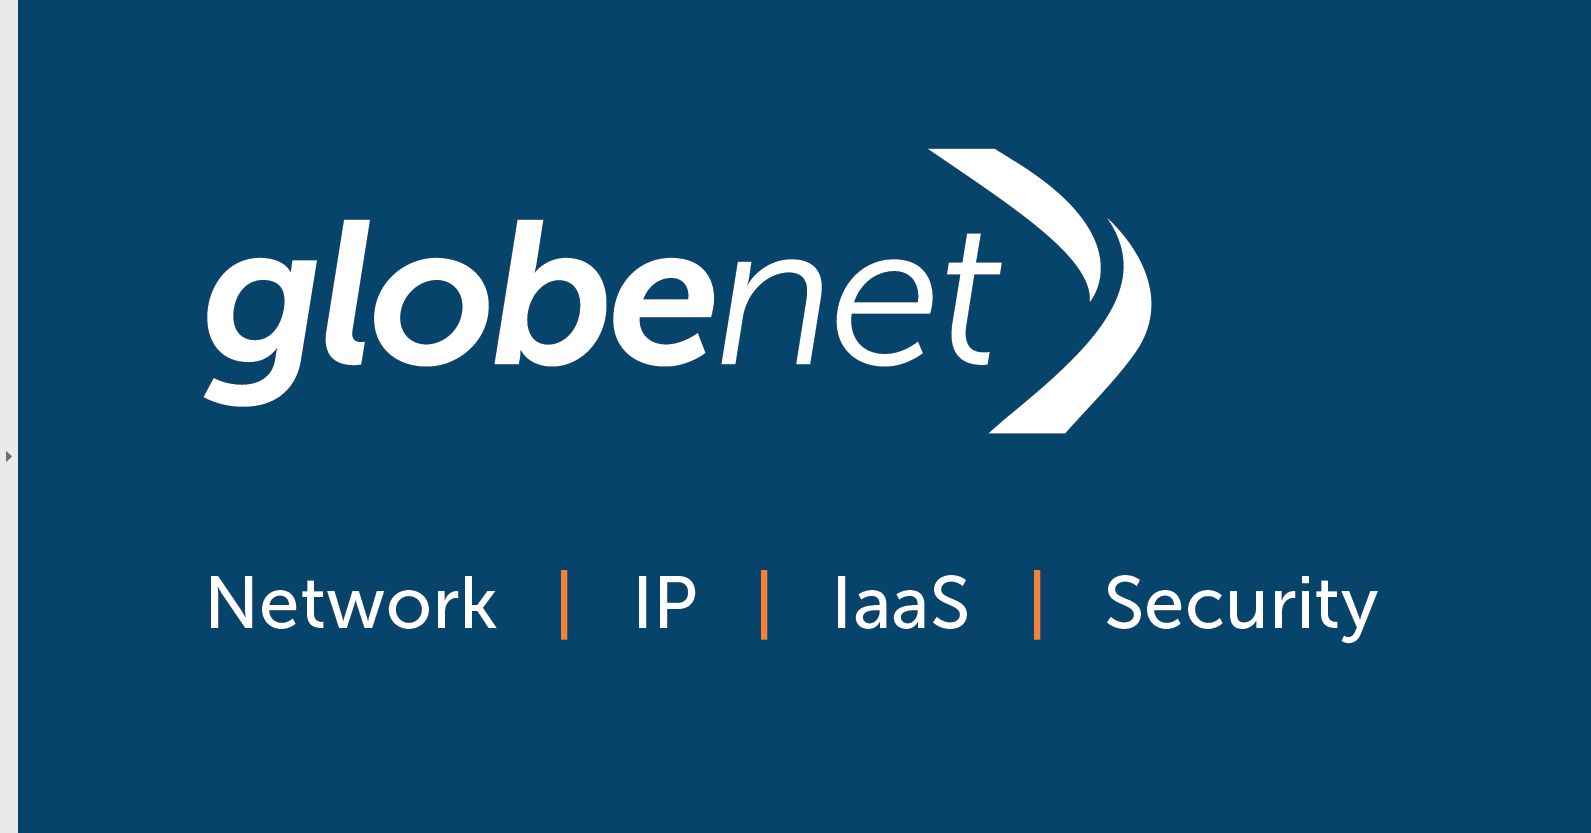 inatel parceria globenet